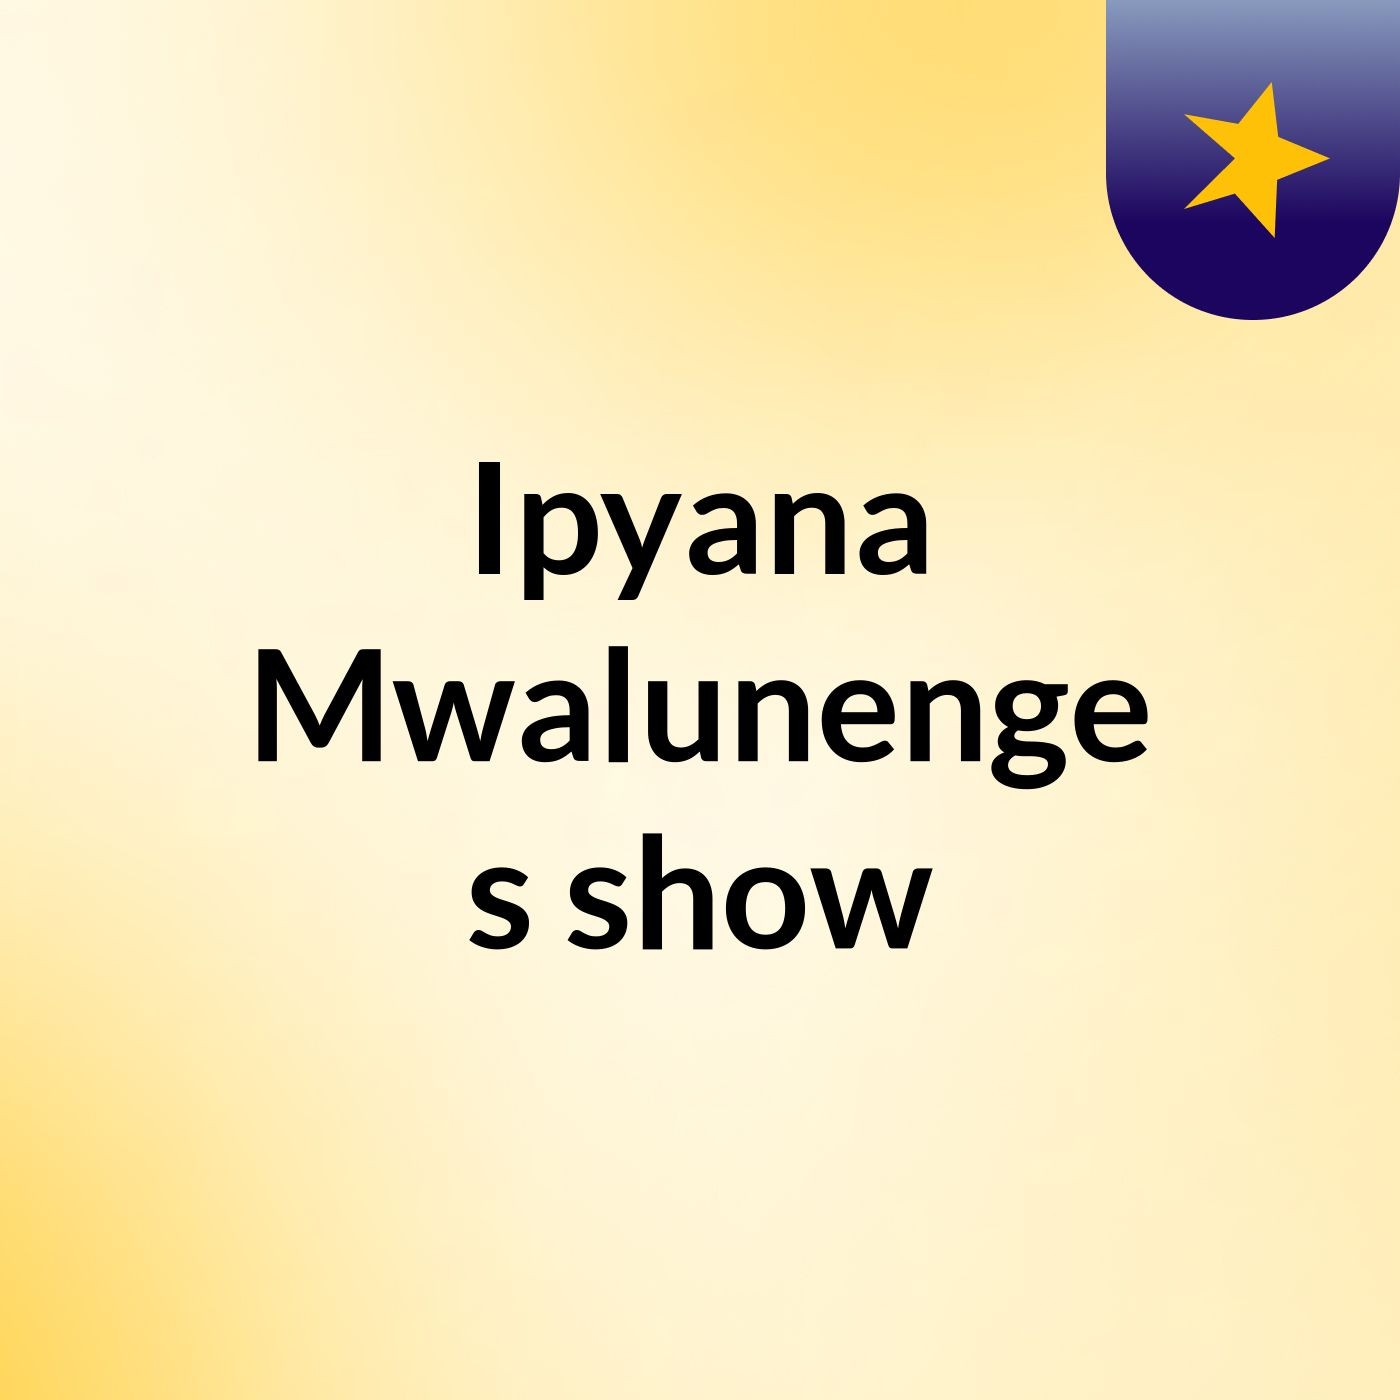 Episode 3 - Ipyana Mwalunenge's show